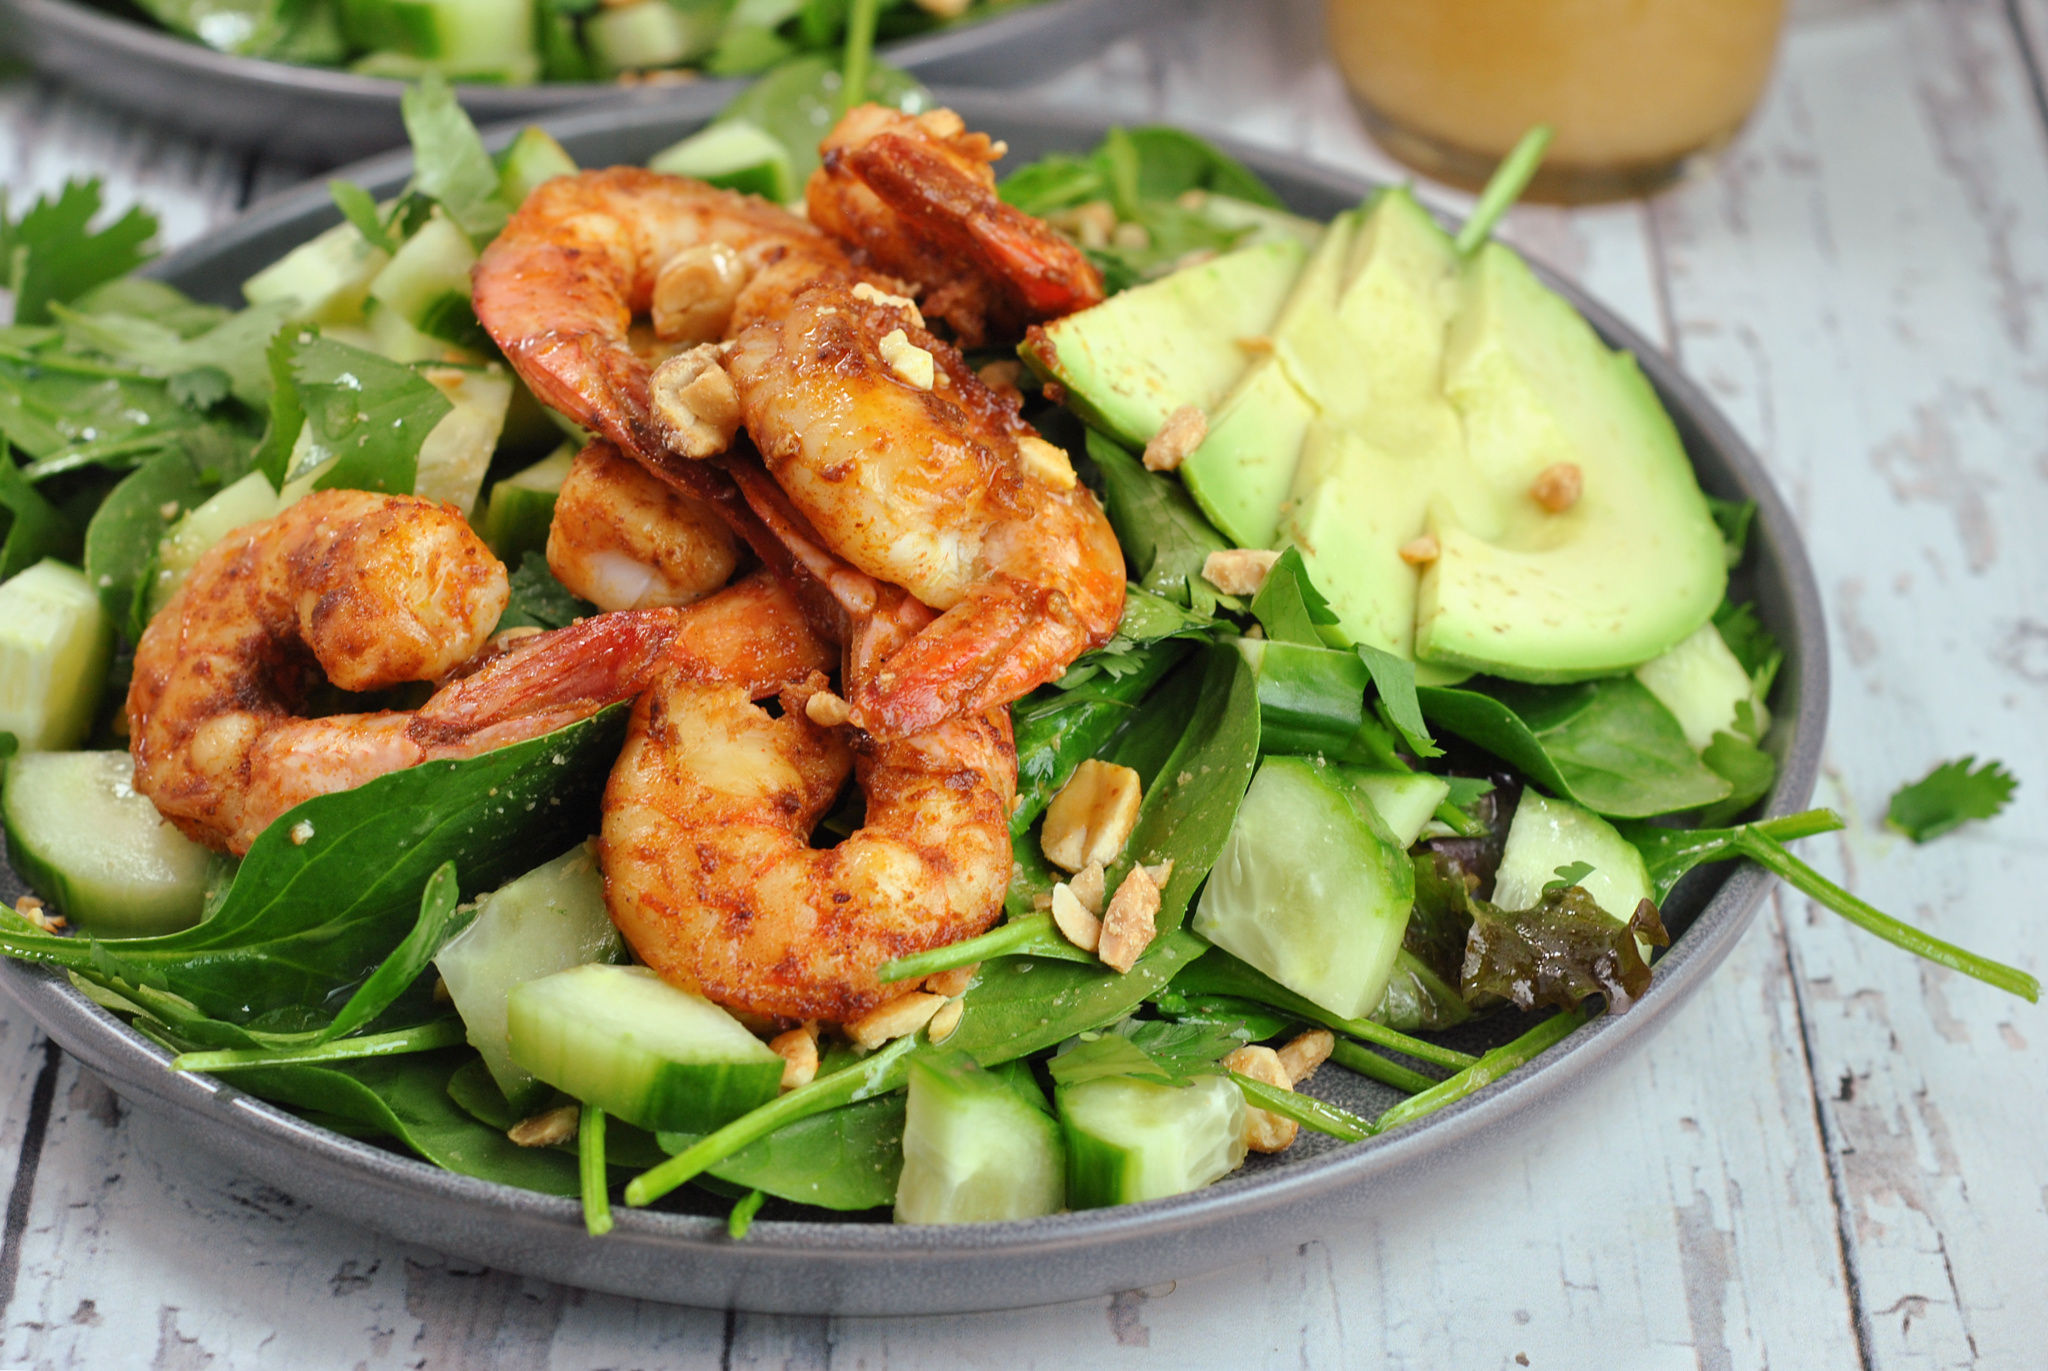 Shrimp and Avocado Salad with Miso Dressing